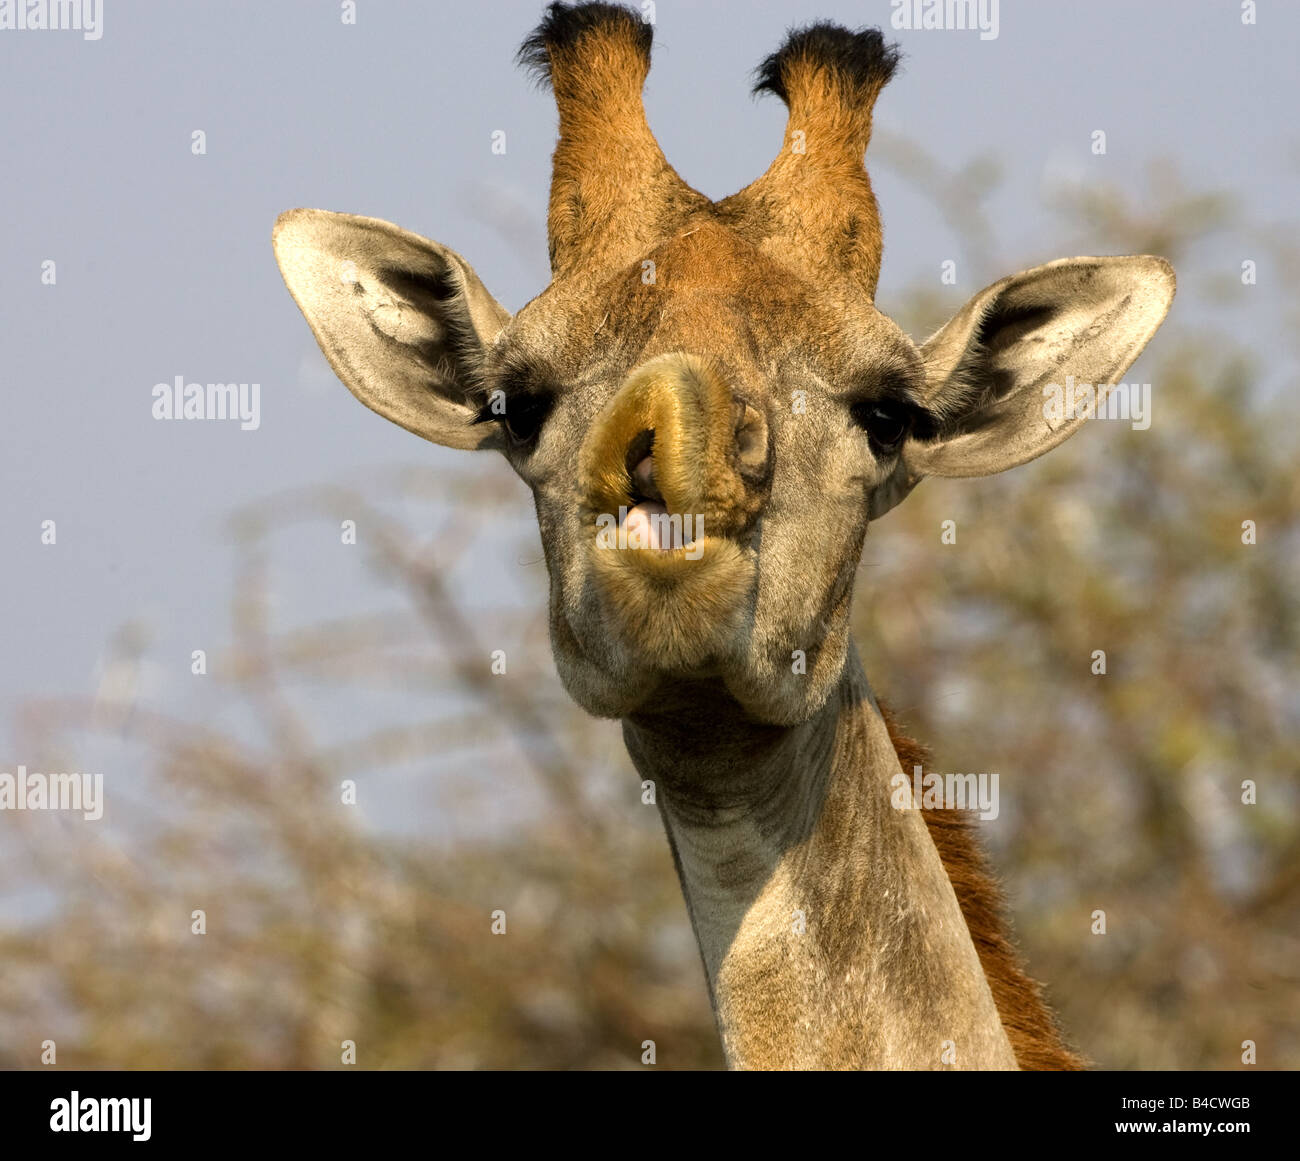 Giraffe chewing leaves, Namibia. Stock Photo